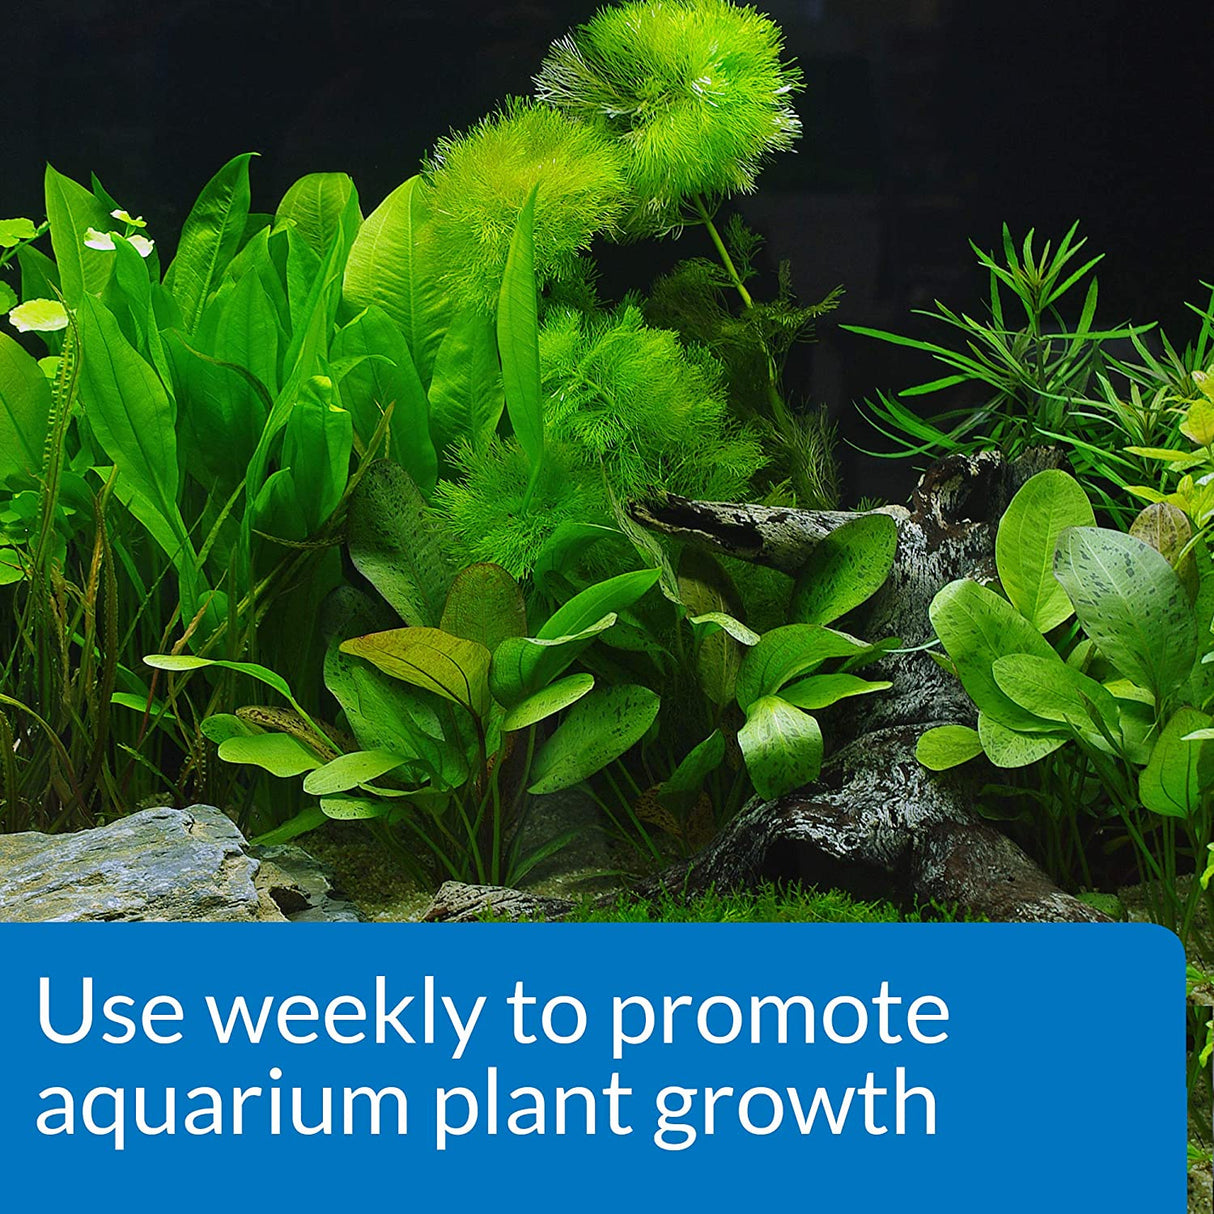 9 oz API Leaf Zone Promotes Aquarium Plant Growth